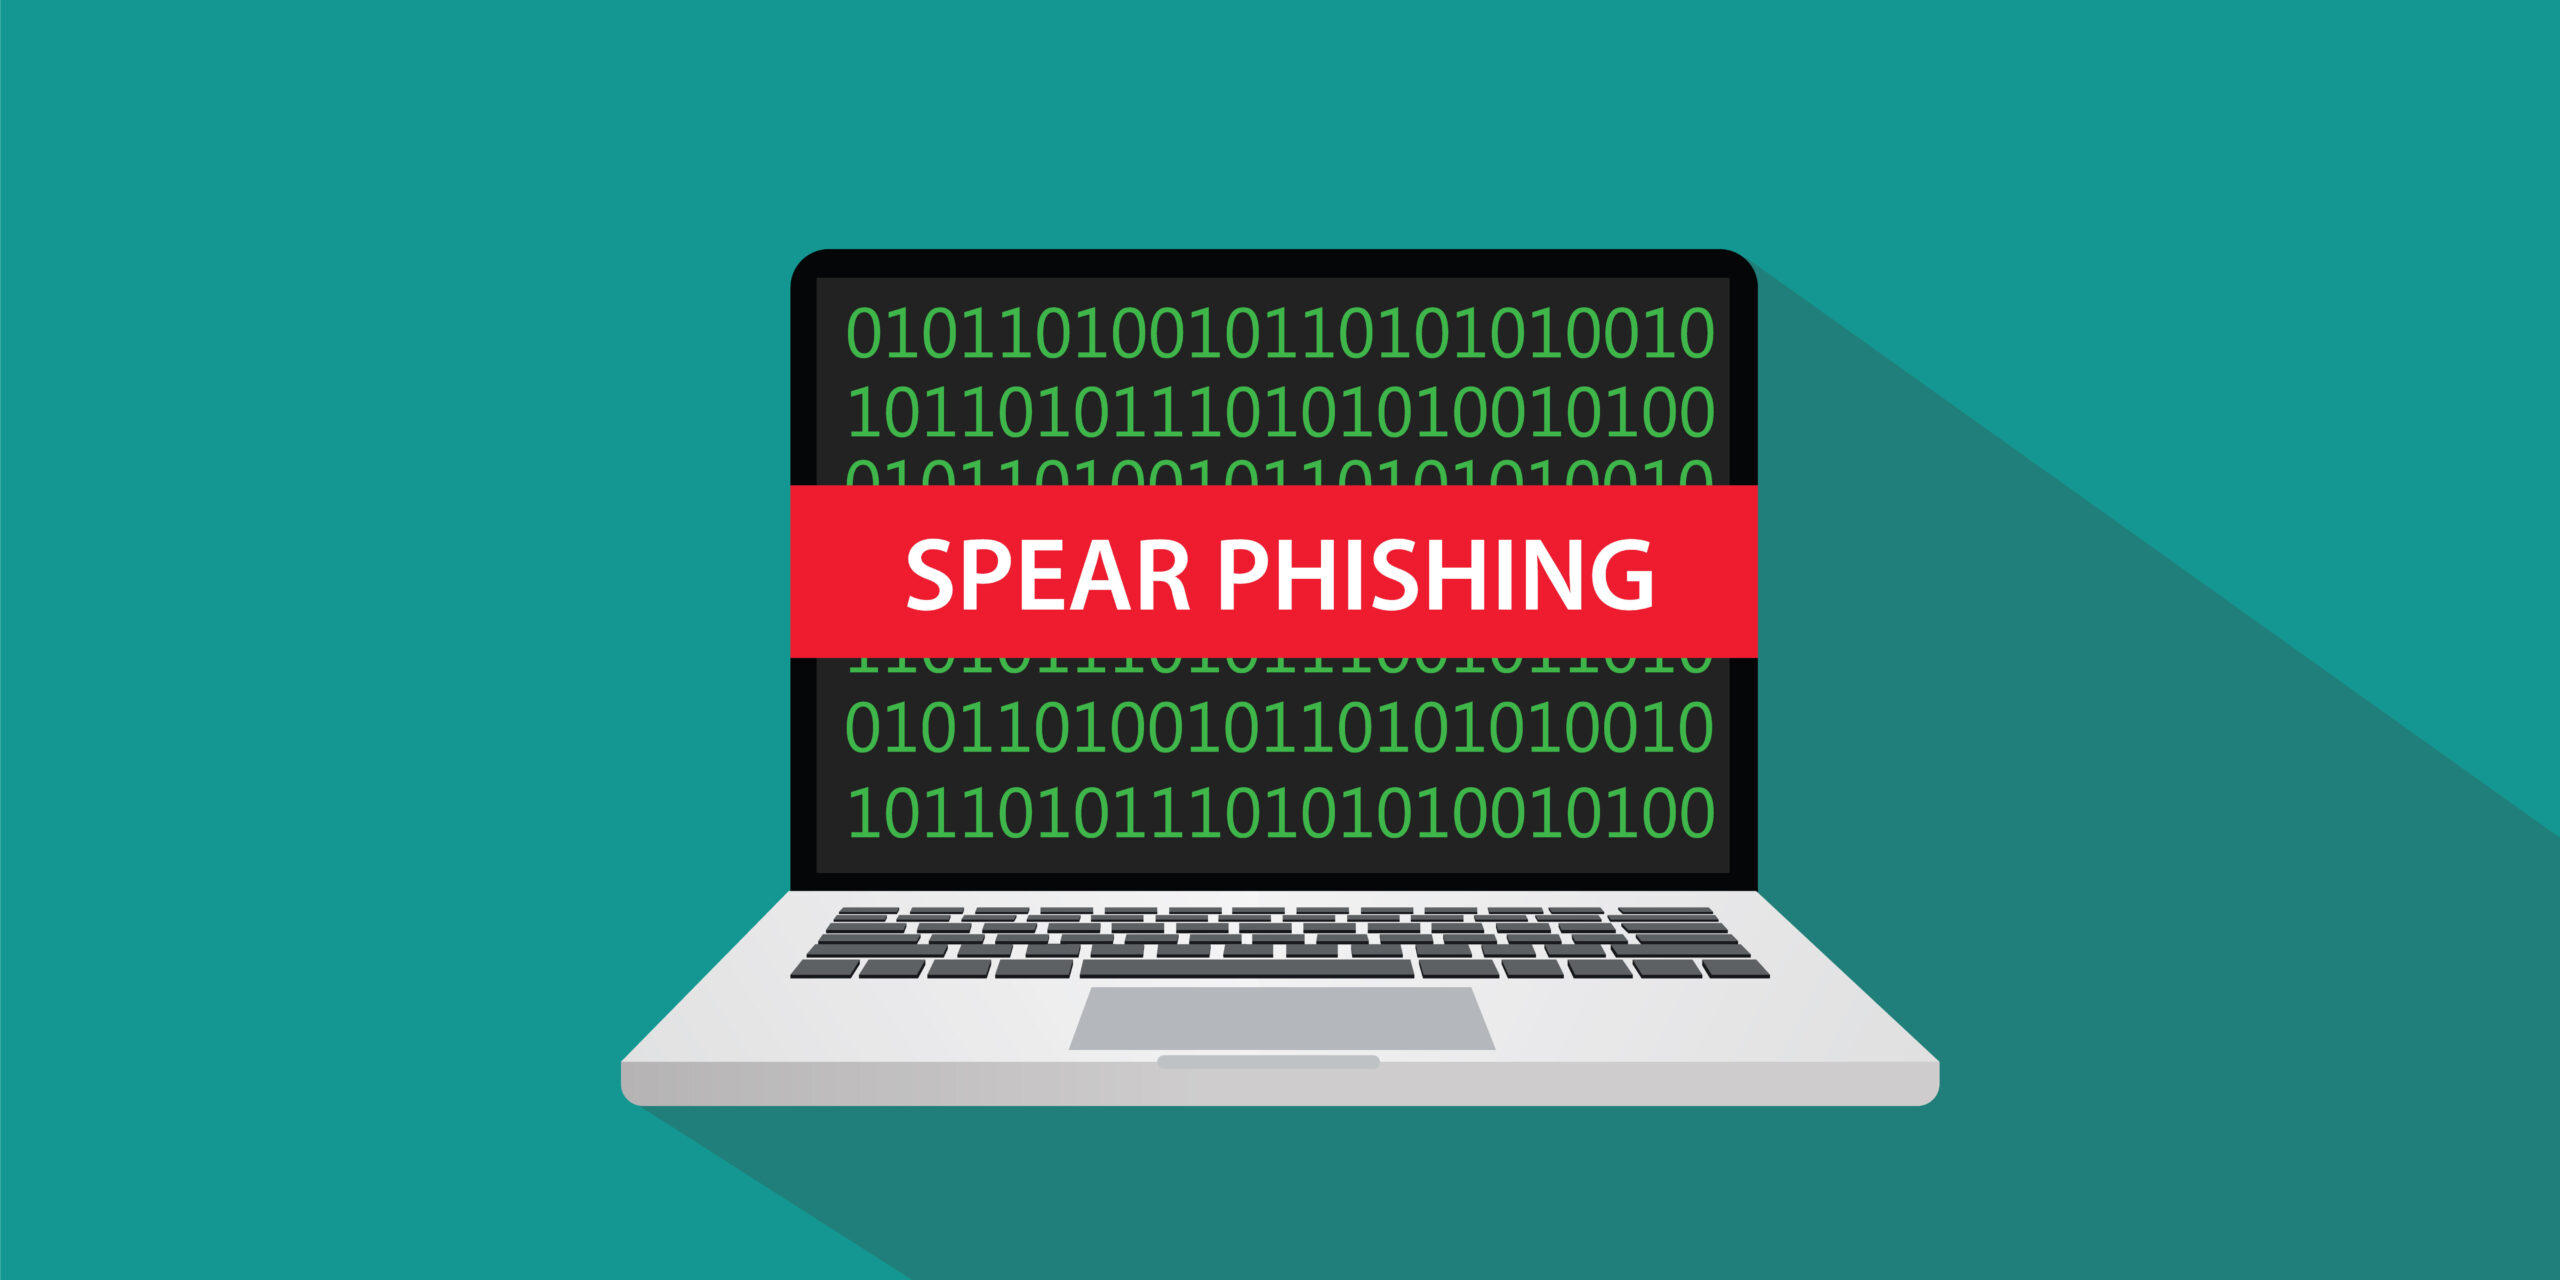 Attacks on Azerbaijan Businesses Drop Malware via Fake Image Files – Source: www.darkreading.com